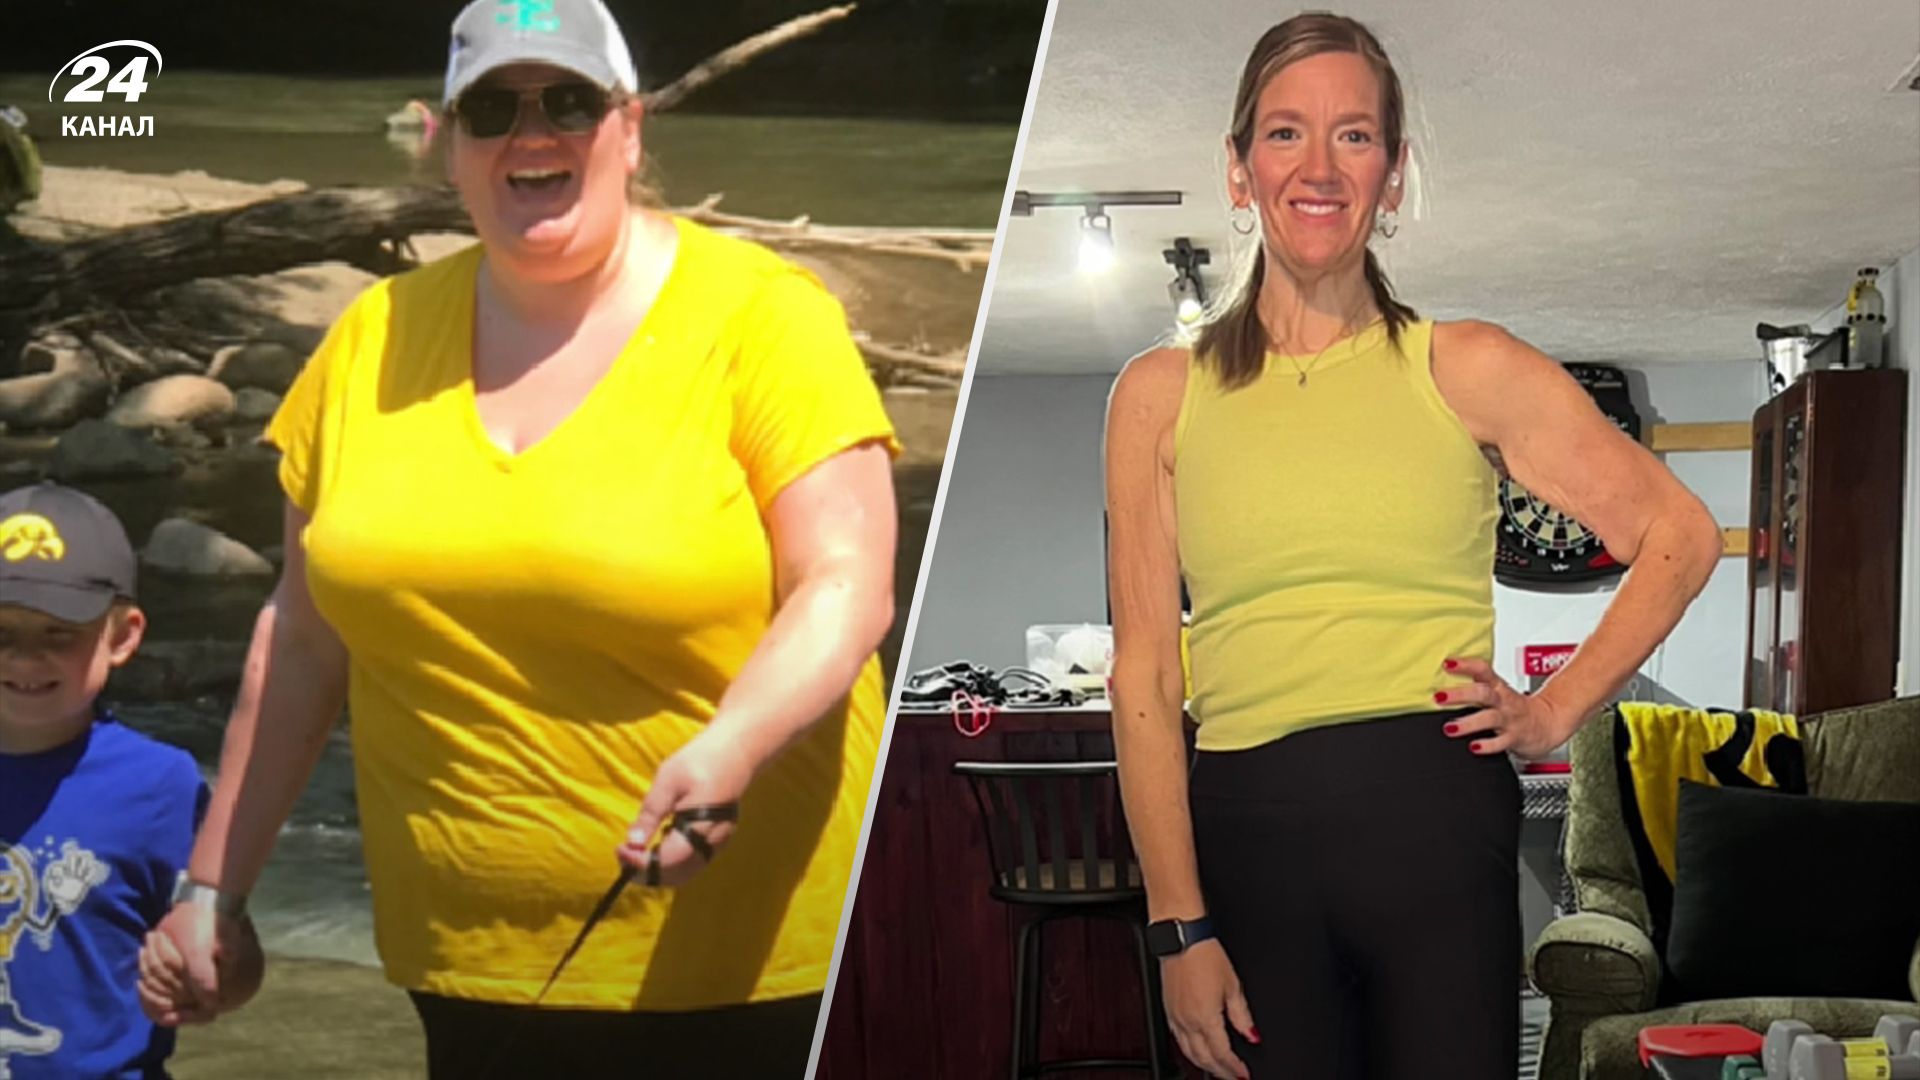 Дженнифер Браун похудела на 84 килограмма благодаря бегу